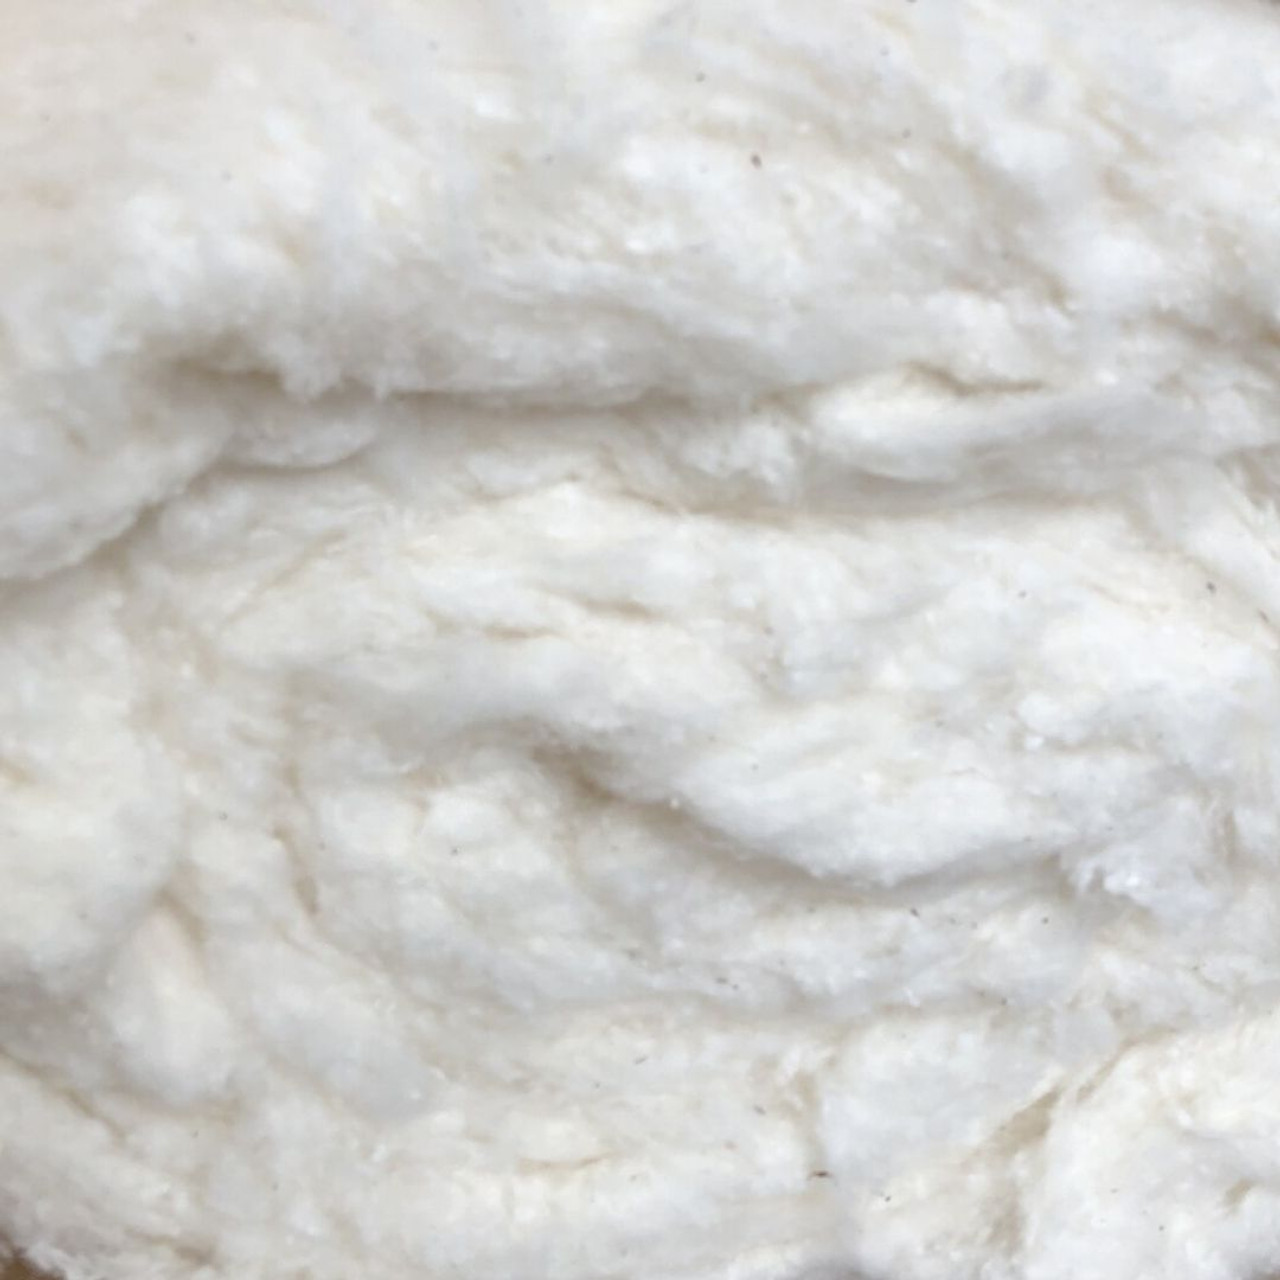 GOTS Certified Organic Cotton Batting - 1 LB